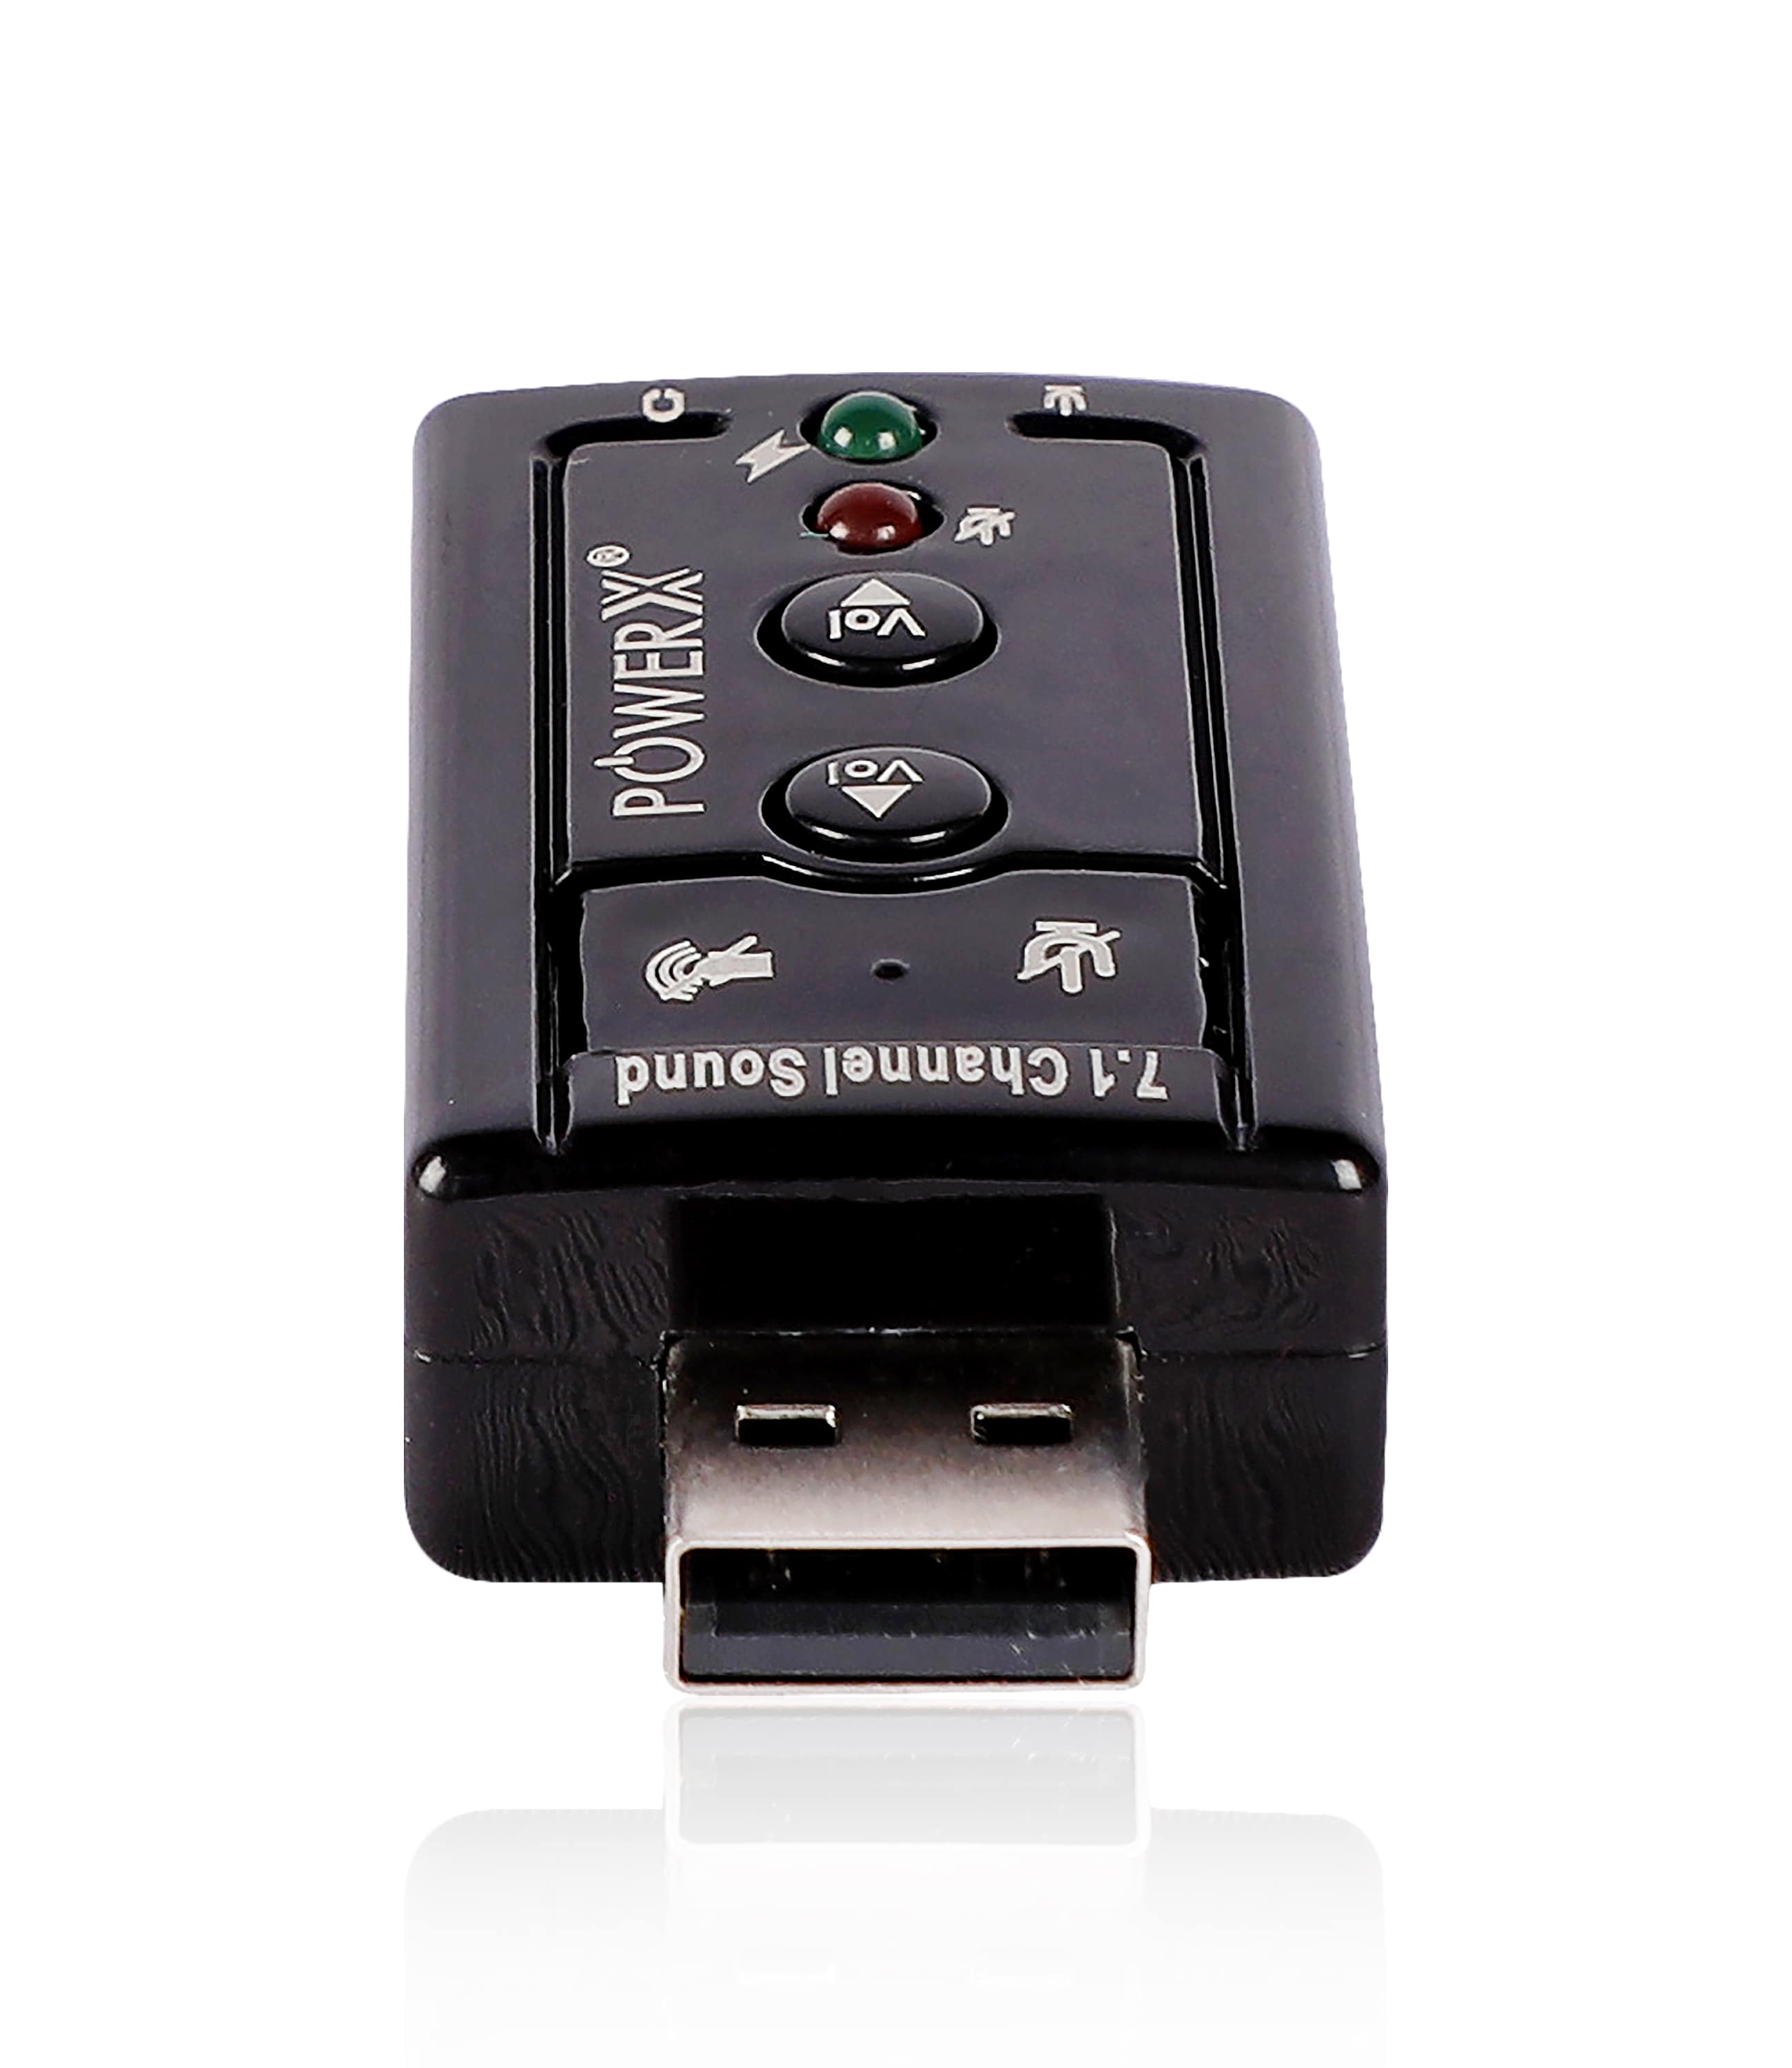 POWERX 7.1CH USB EXTERNAL SOUND CARD ADAPTER WITH MIC